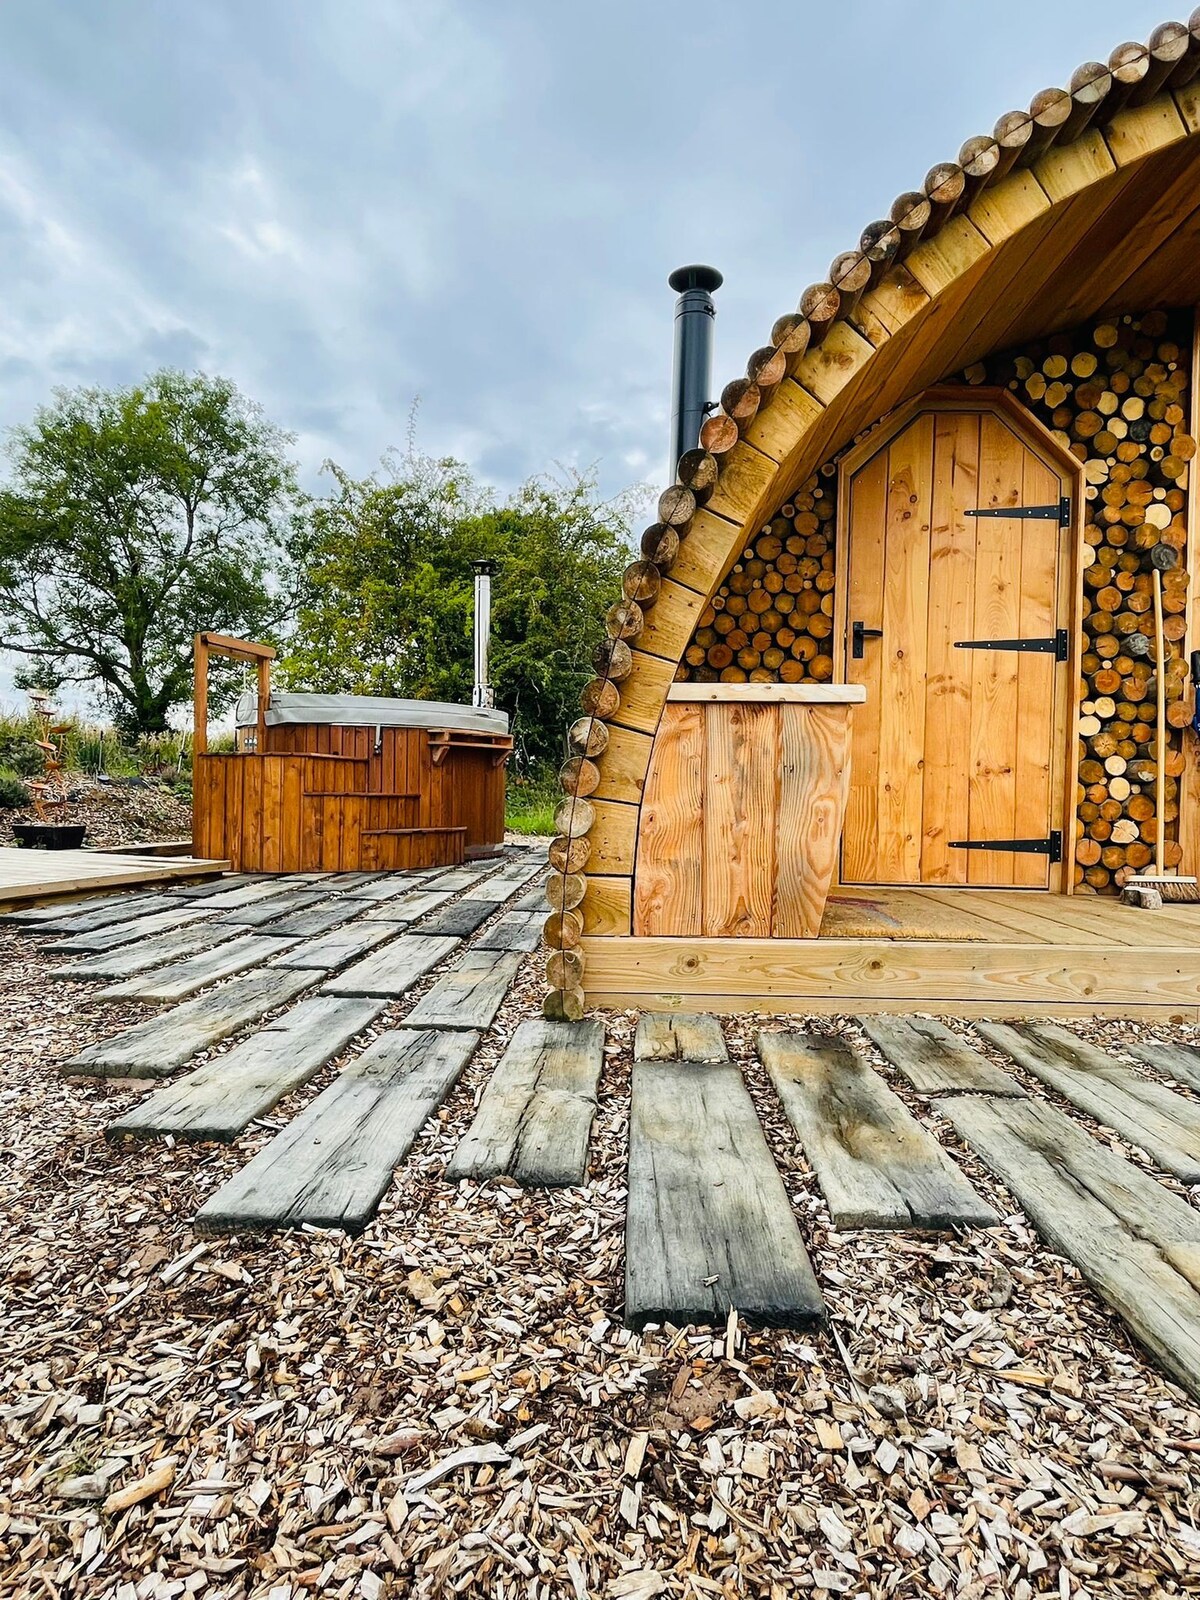 Waterfront wooden Lodge w/Hot Tub
(Pheasant Lodge)